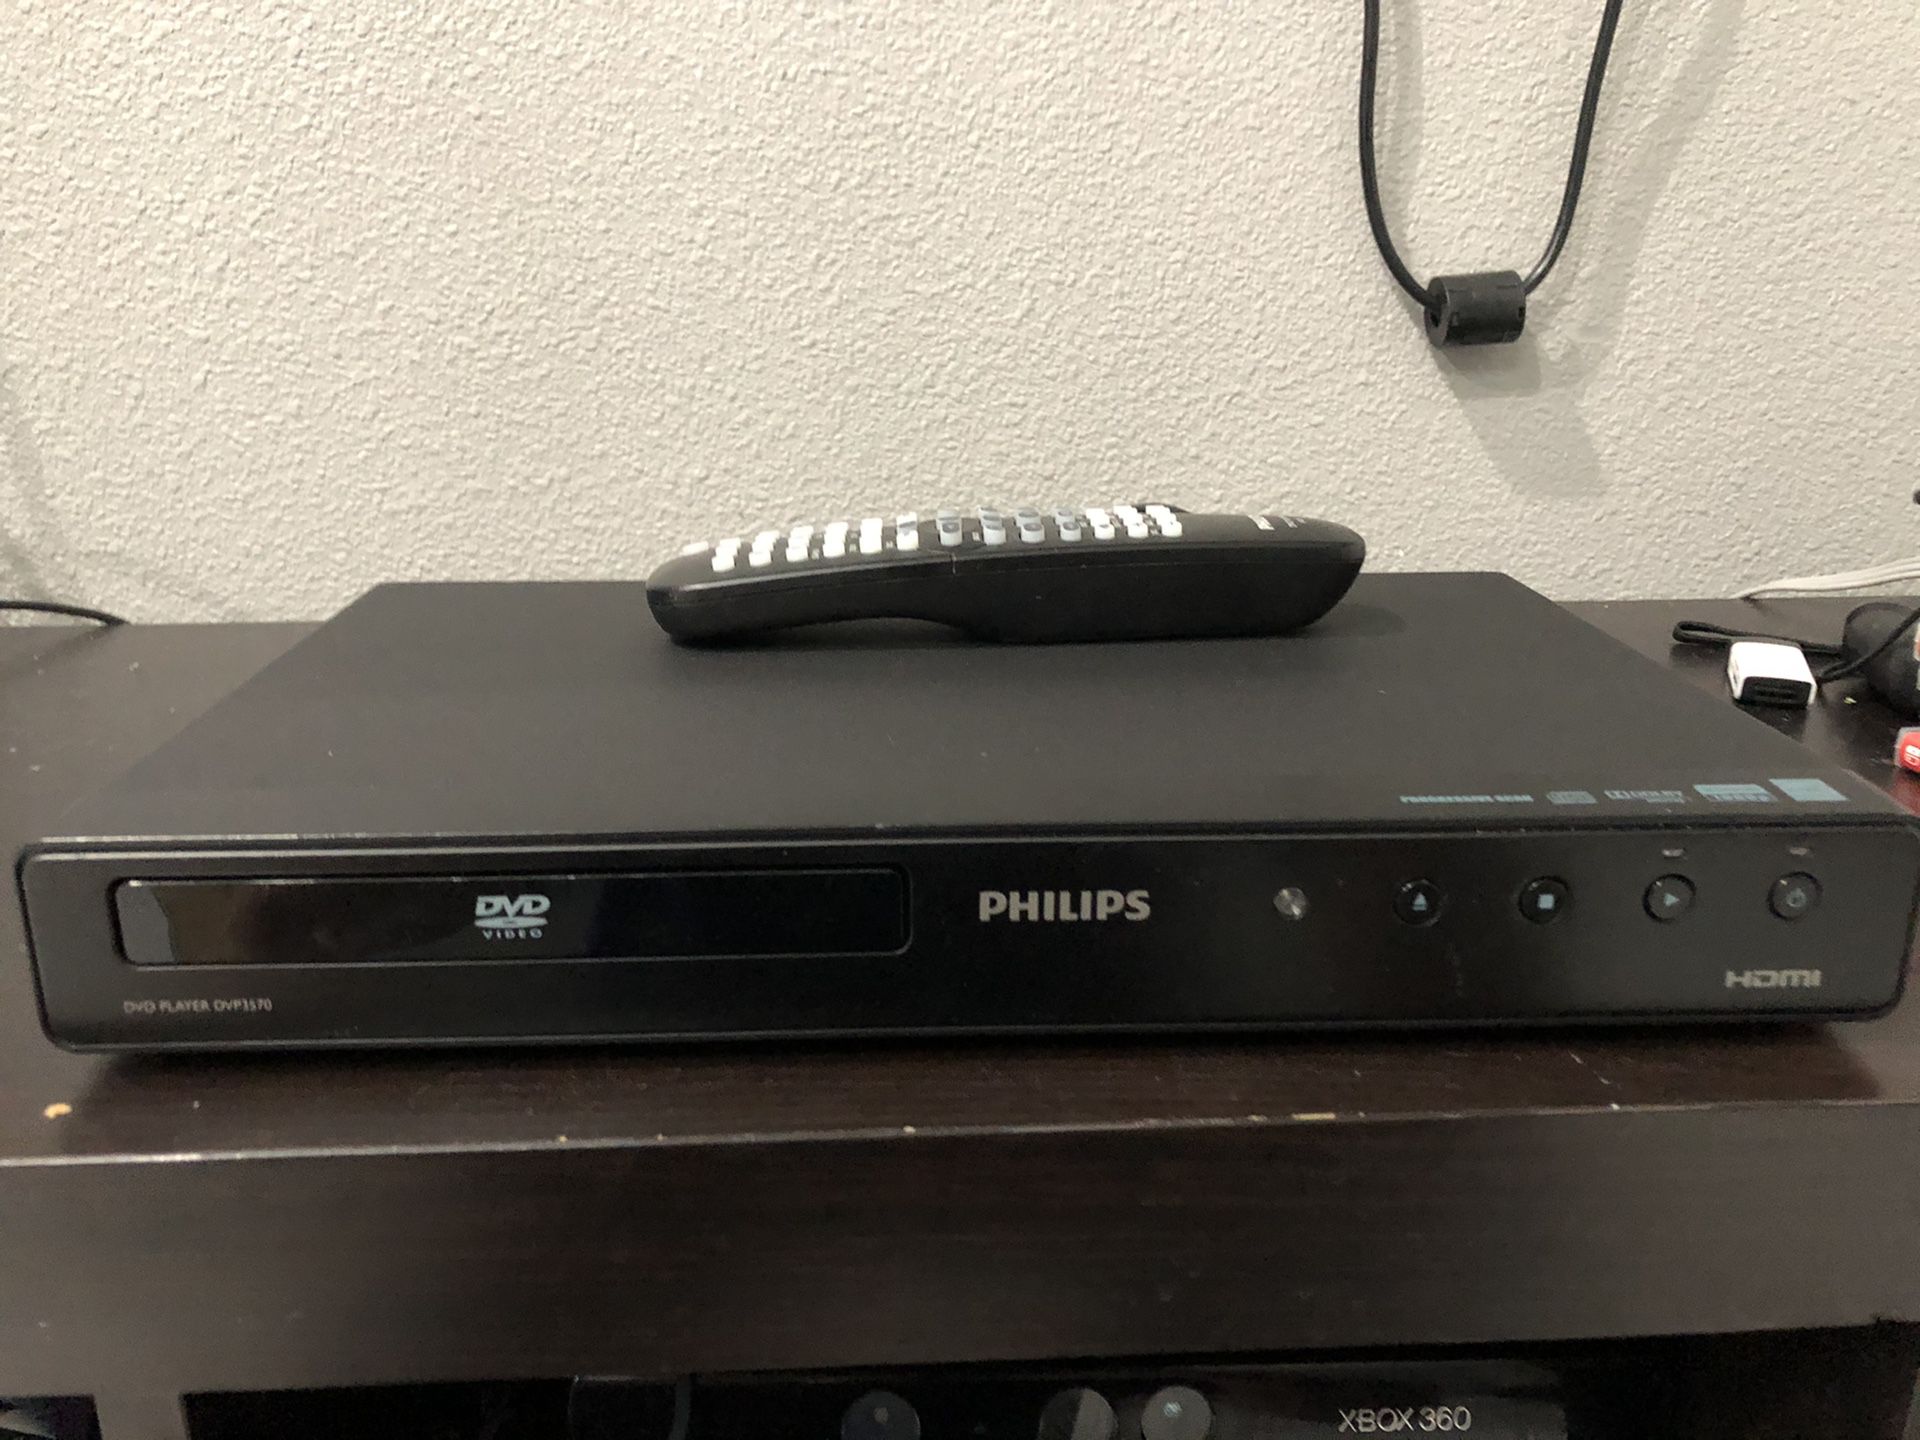 Philips DVD player